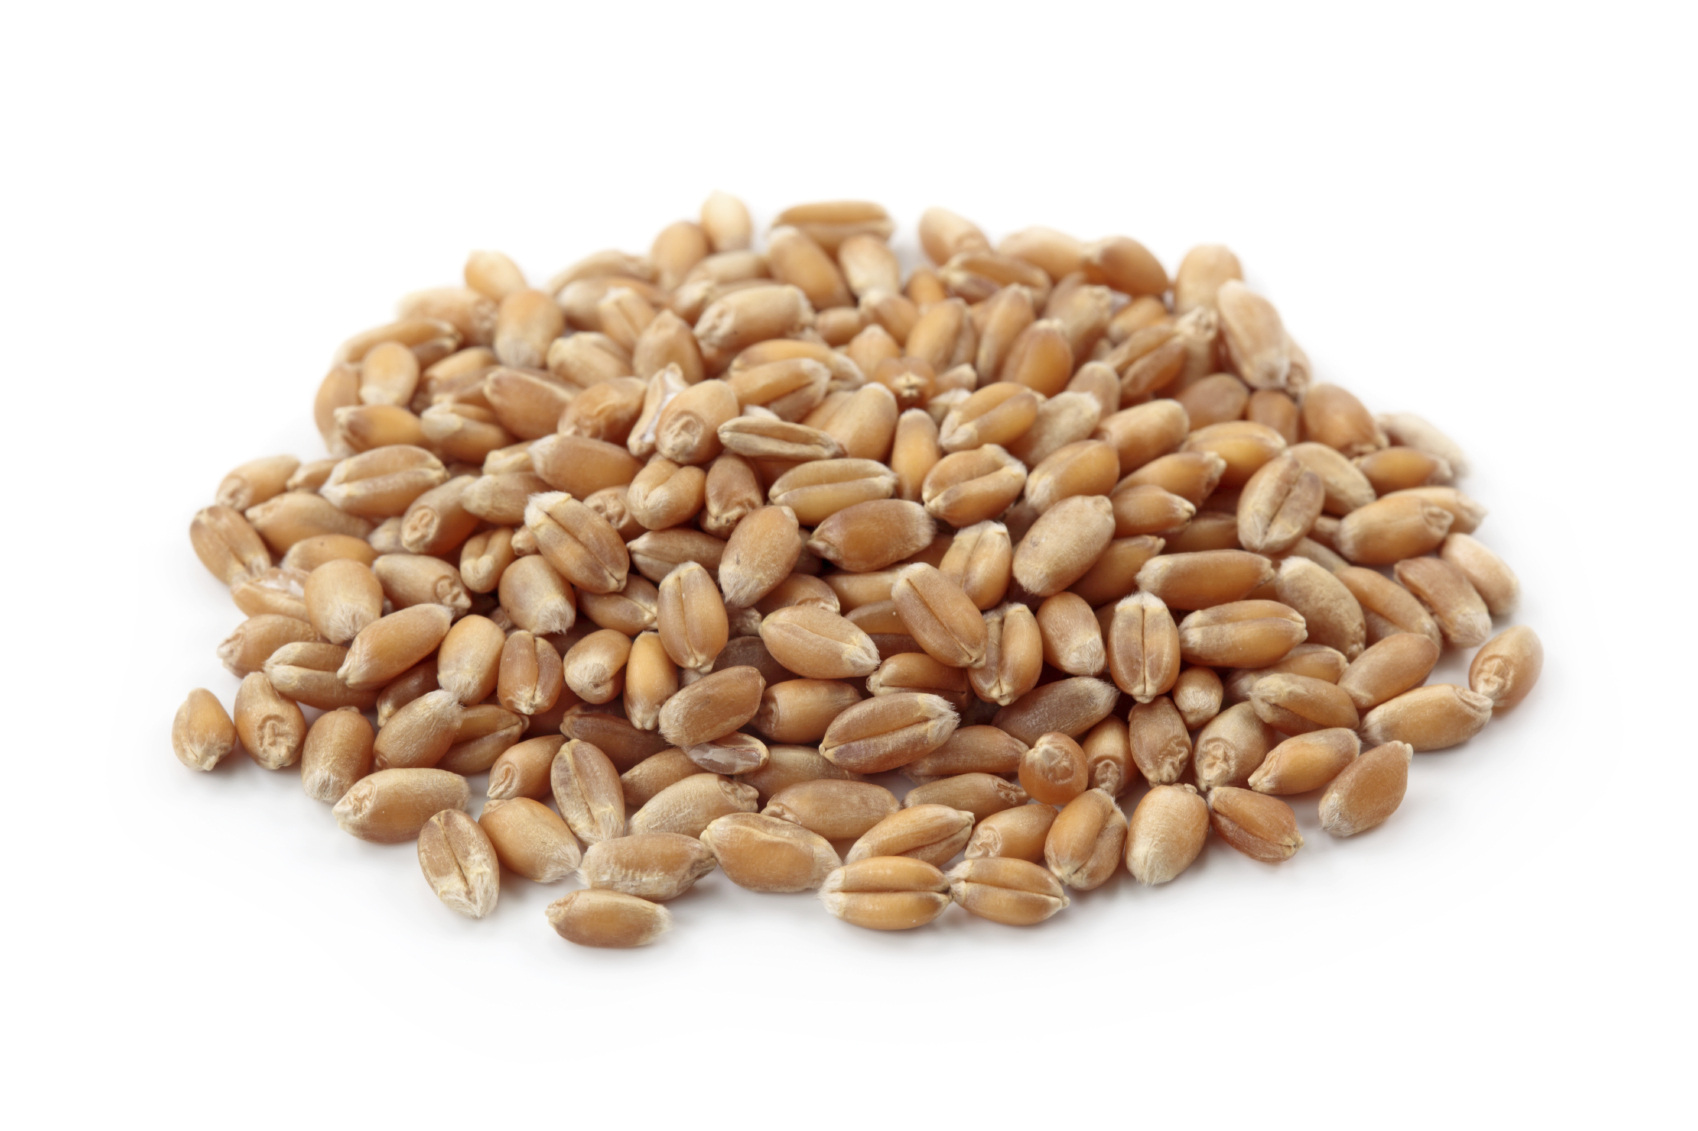 Wheat and grains worksheet | Grainchain